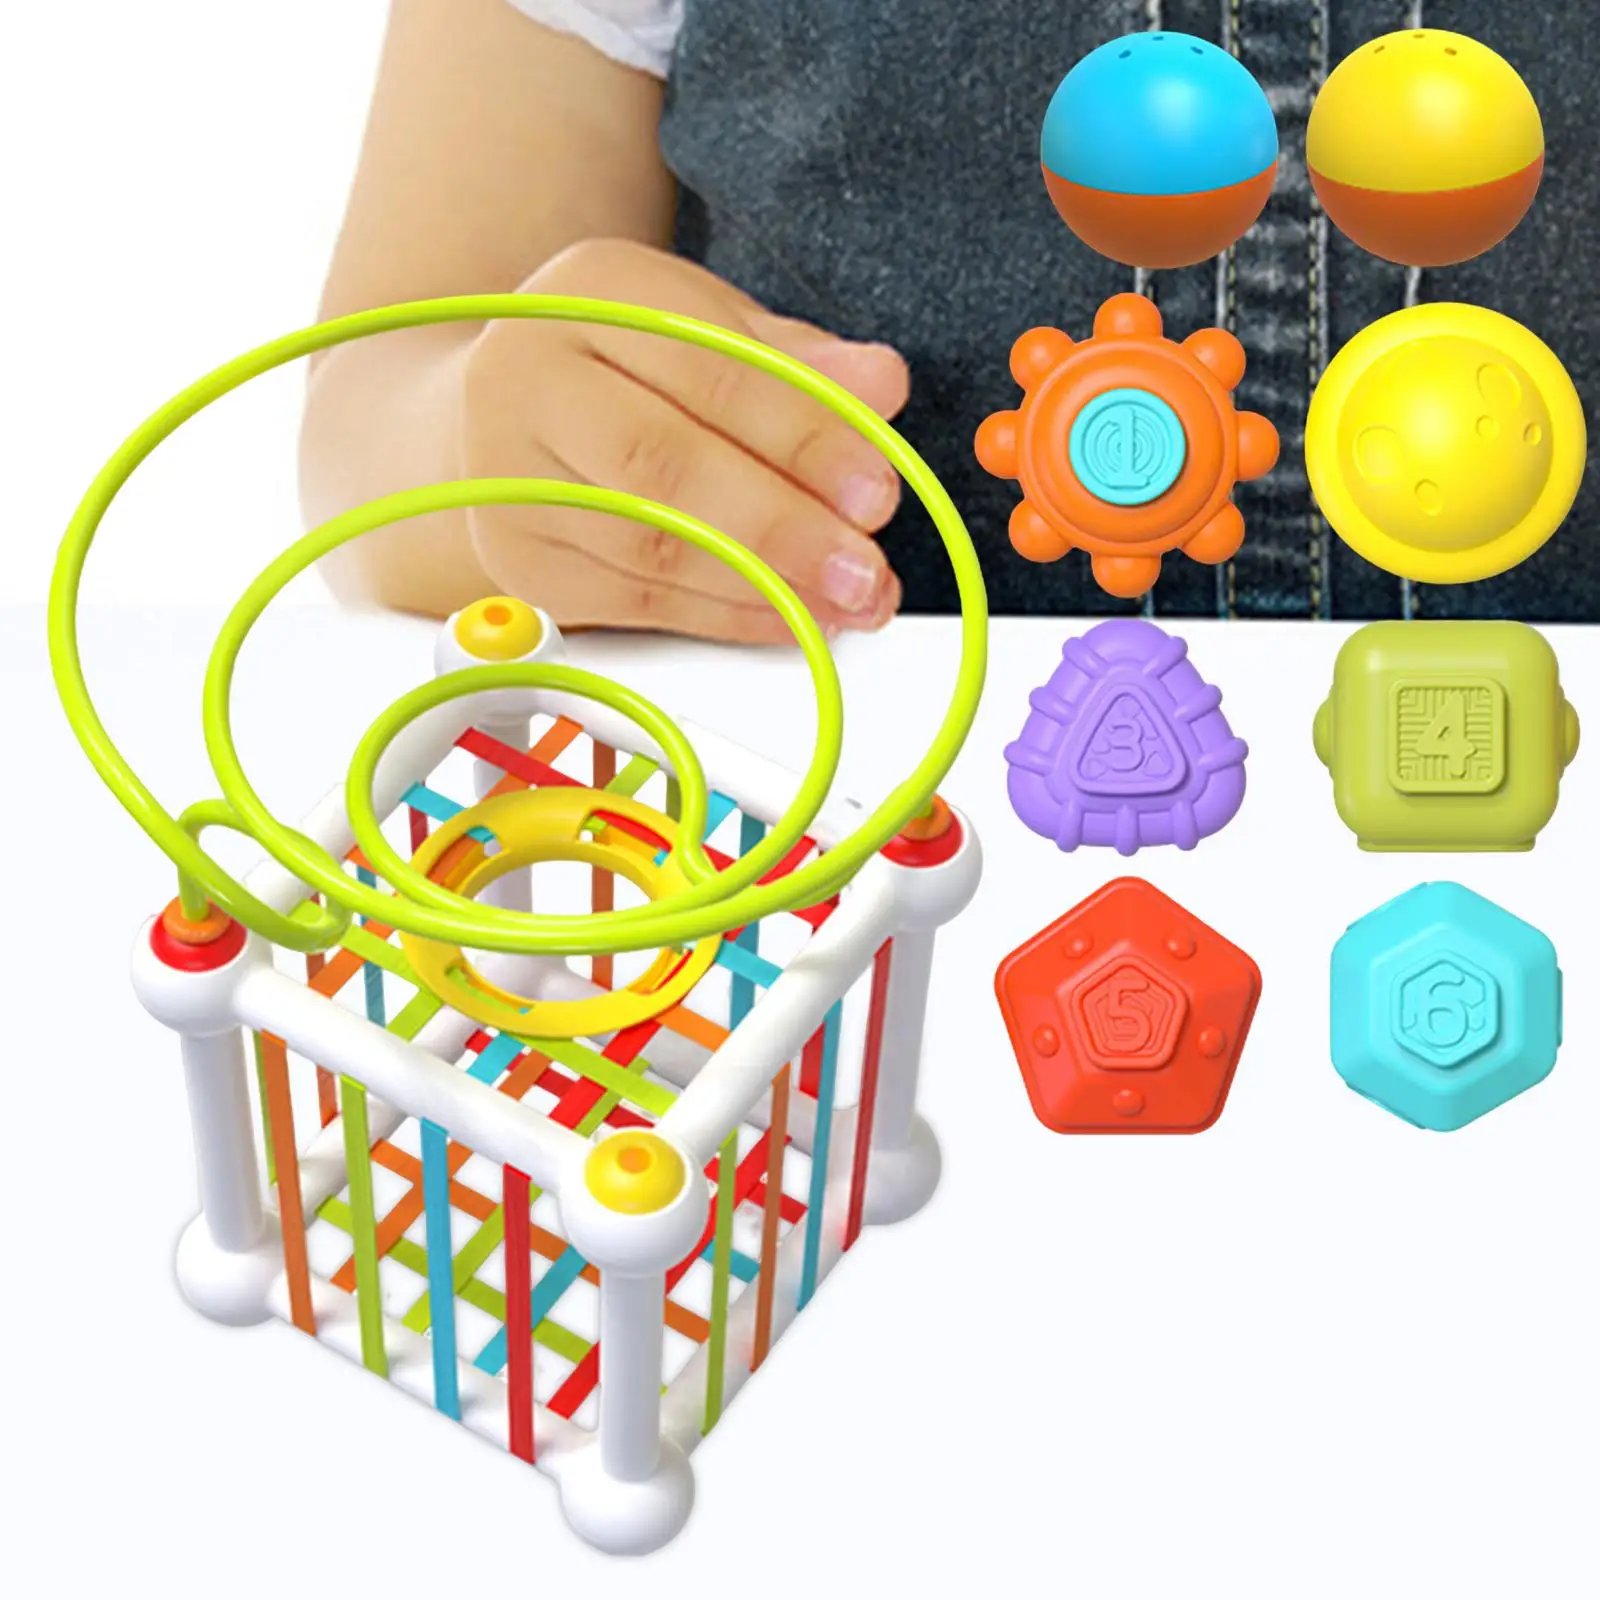 Montessori Shape Blocks Learning Textured Balls Sorting Games for Game Imagination Creativity Sensory Exploration Activity